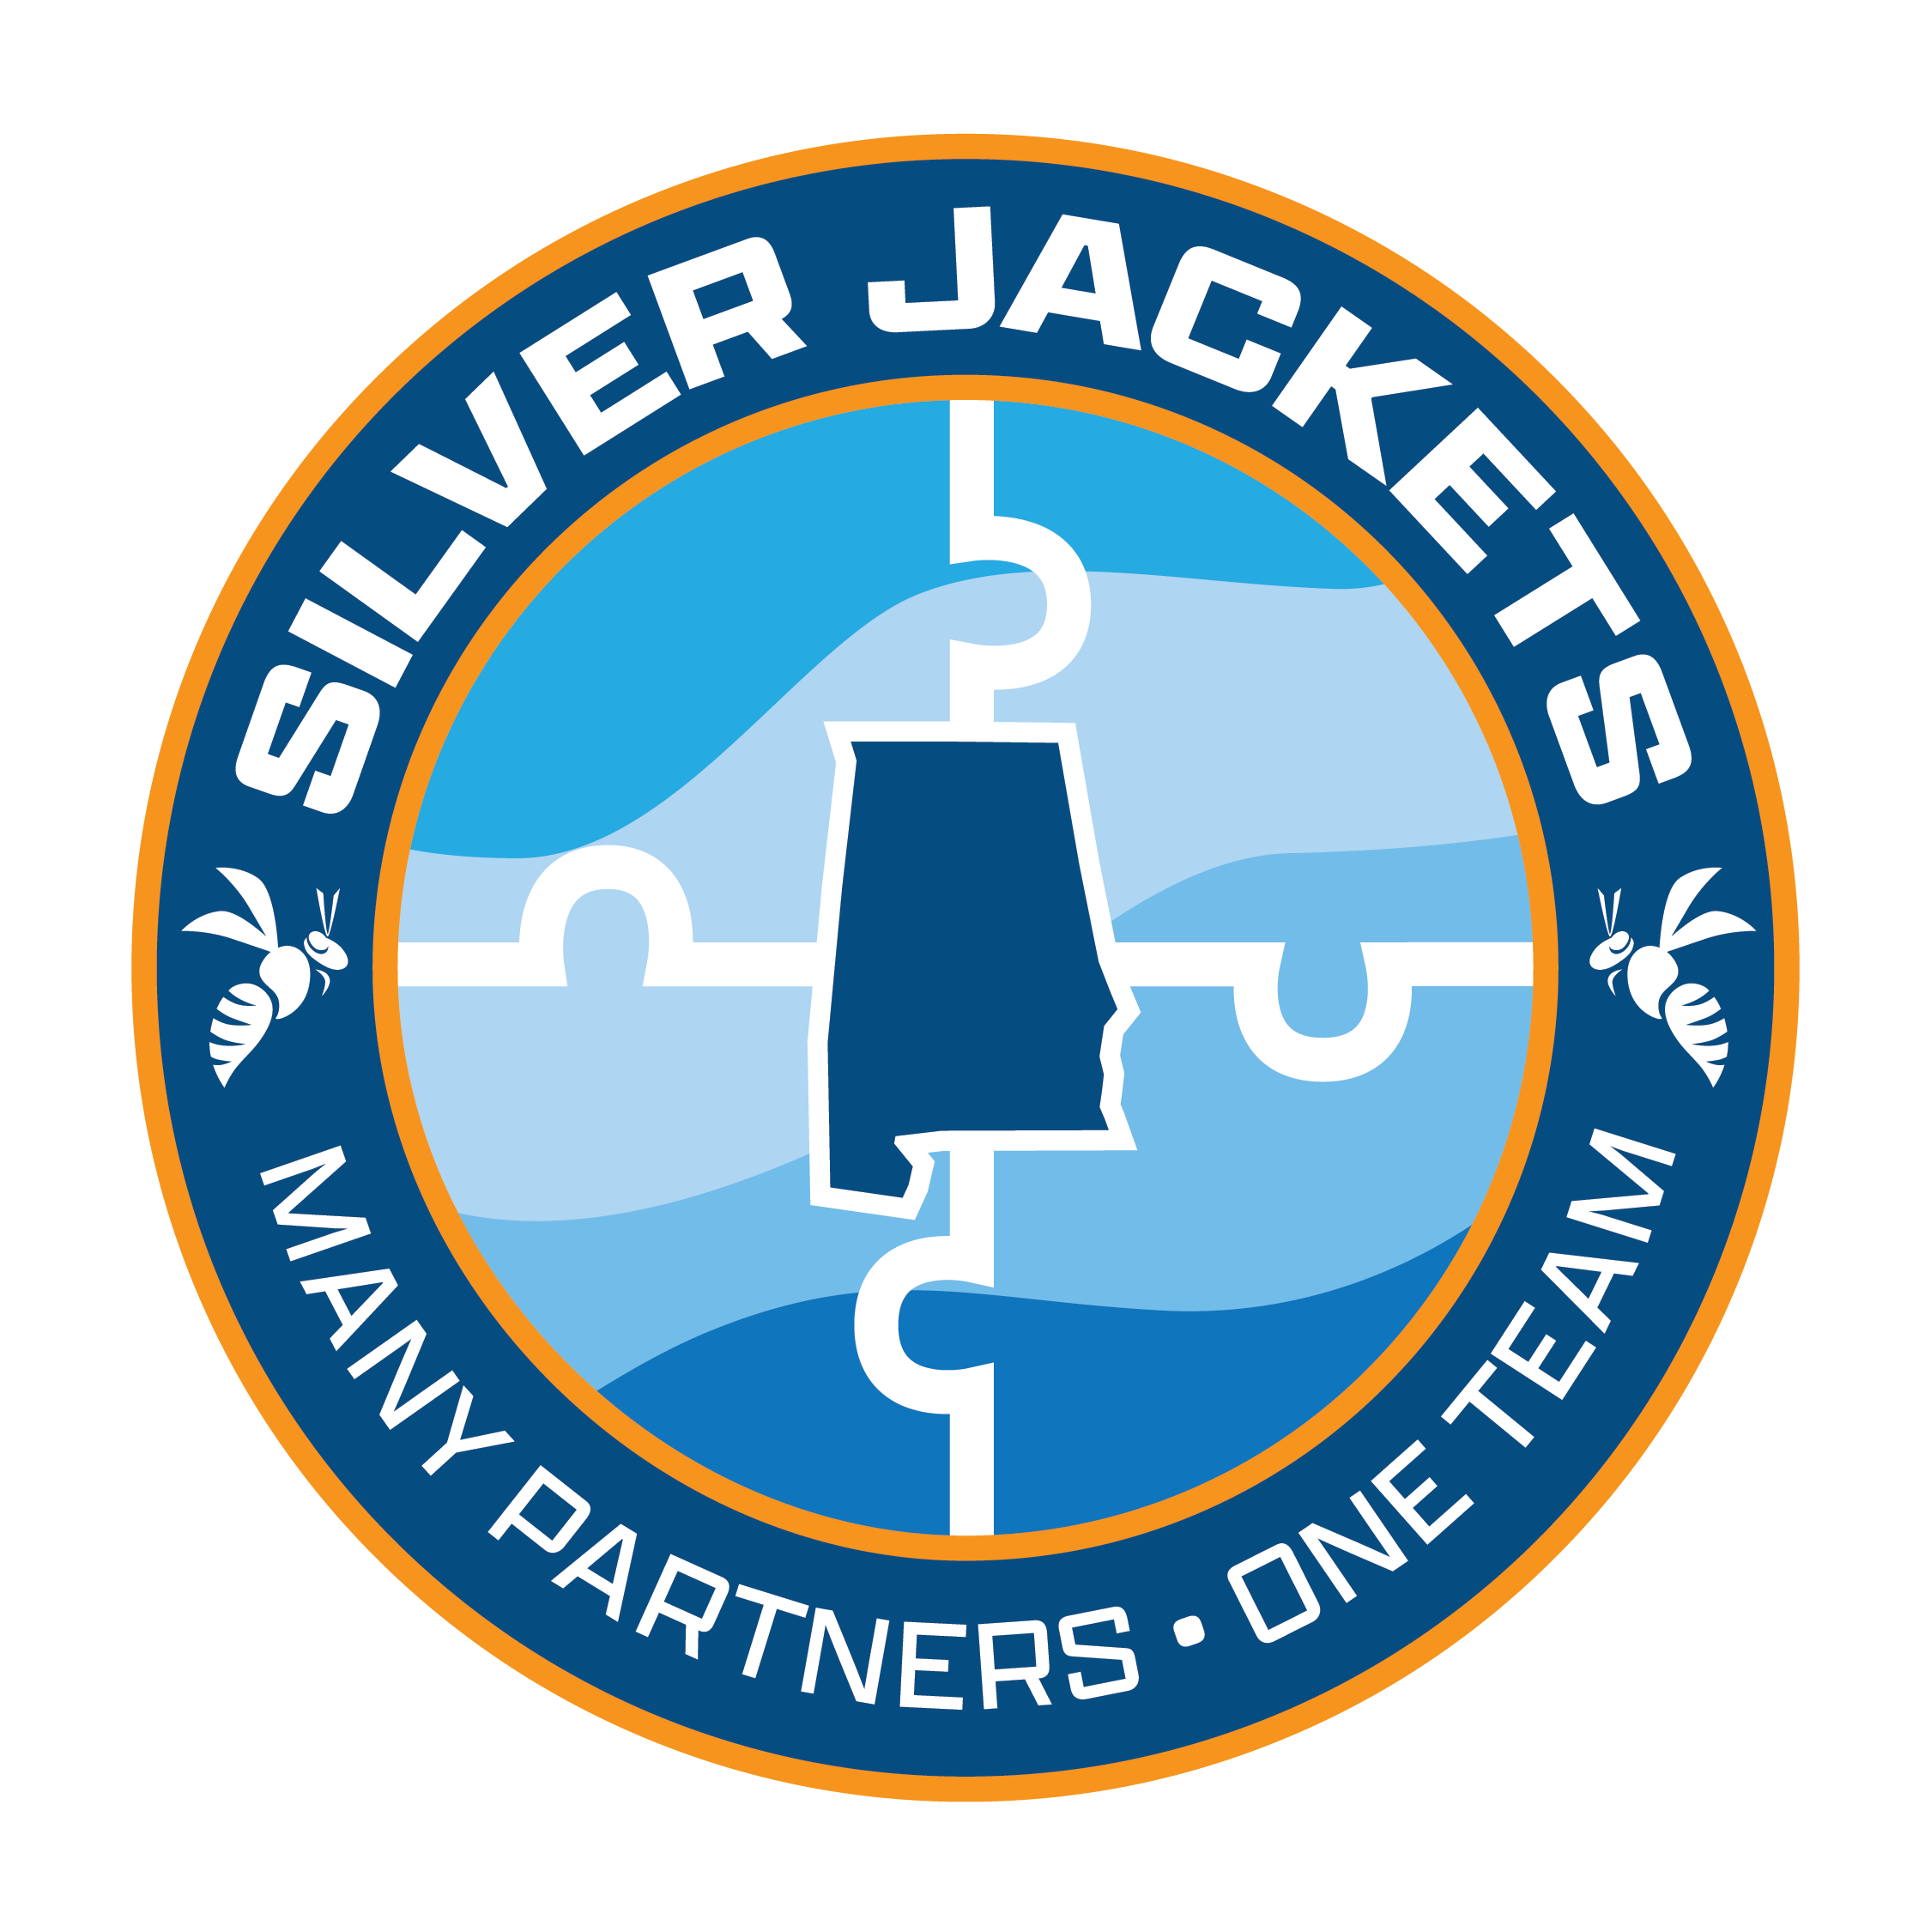 Alabama Silver Jackets logo